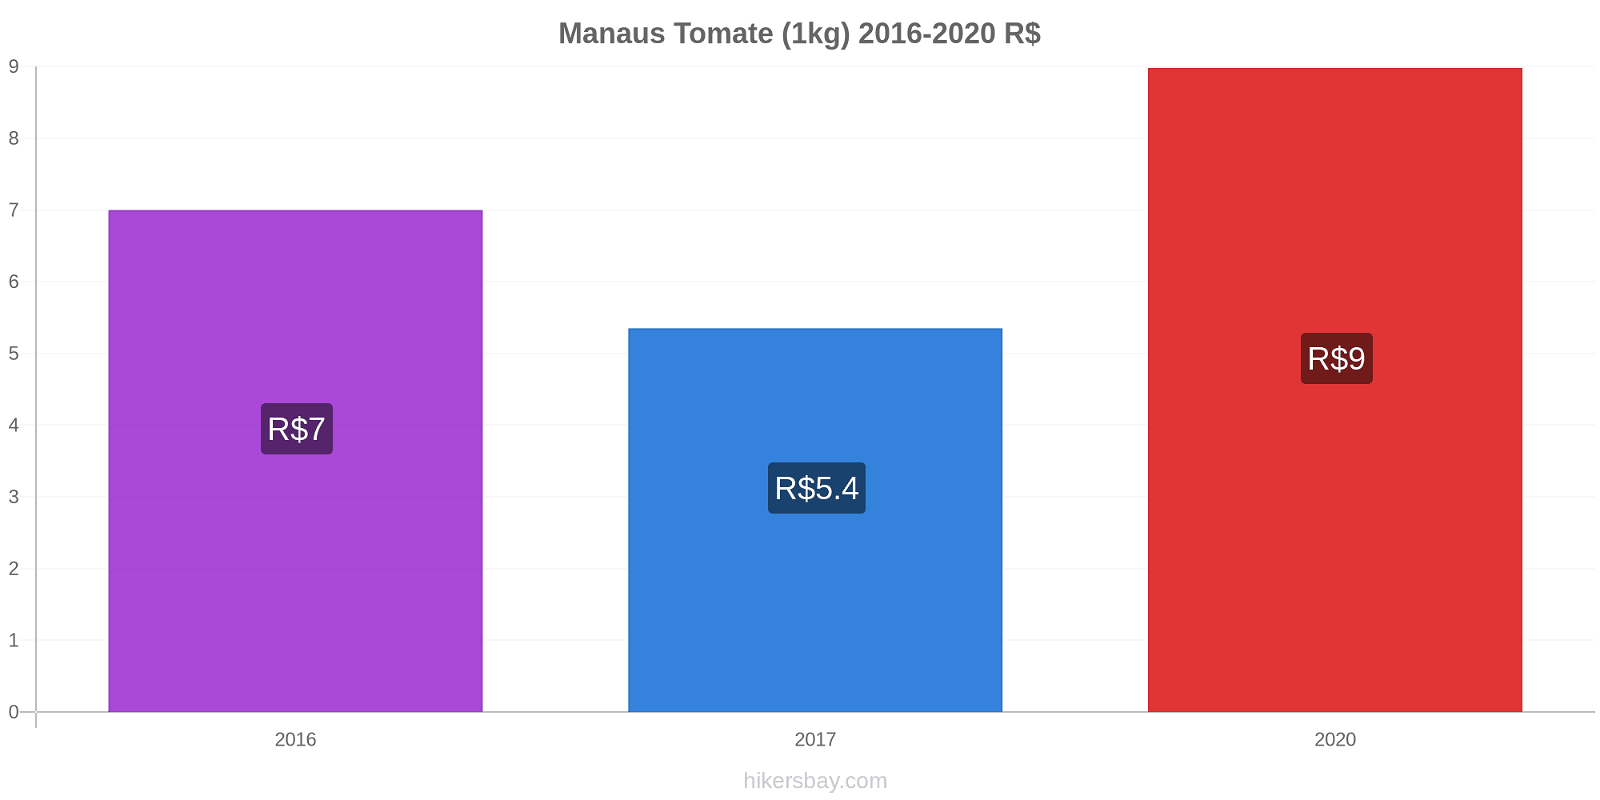 Manaus changements de prix Tomate (1kg) hikersbay.com